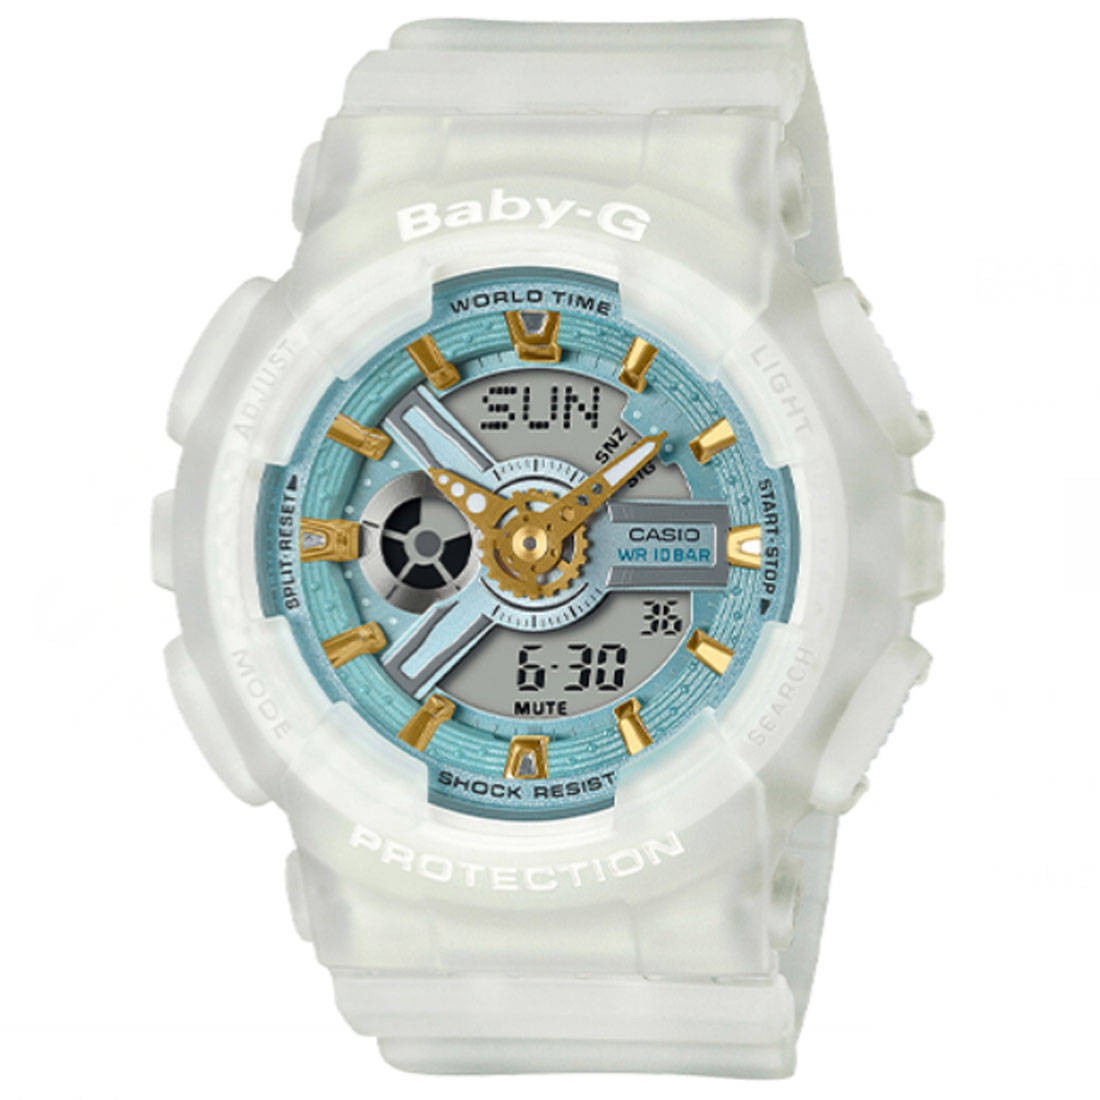 Baby G BA110 Watch (white)